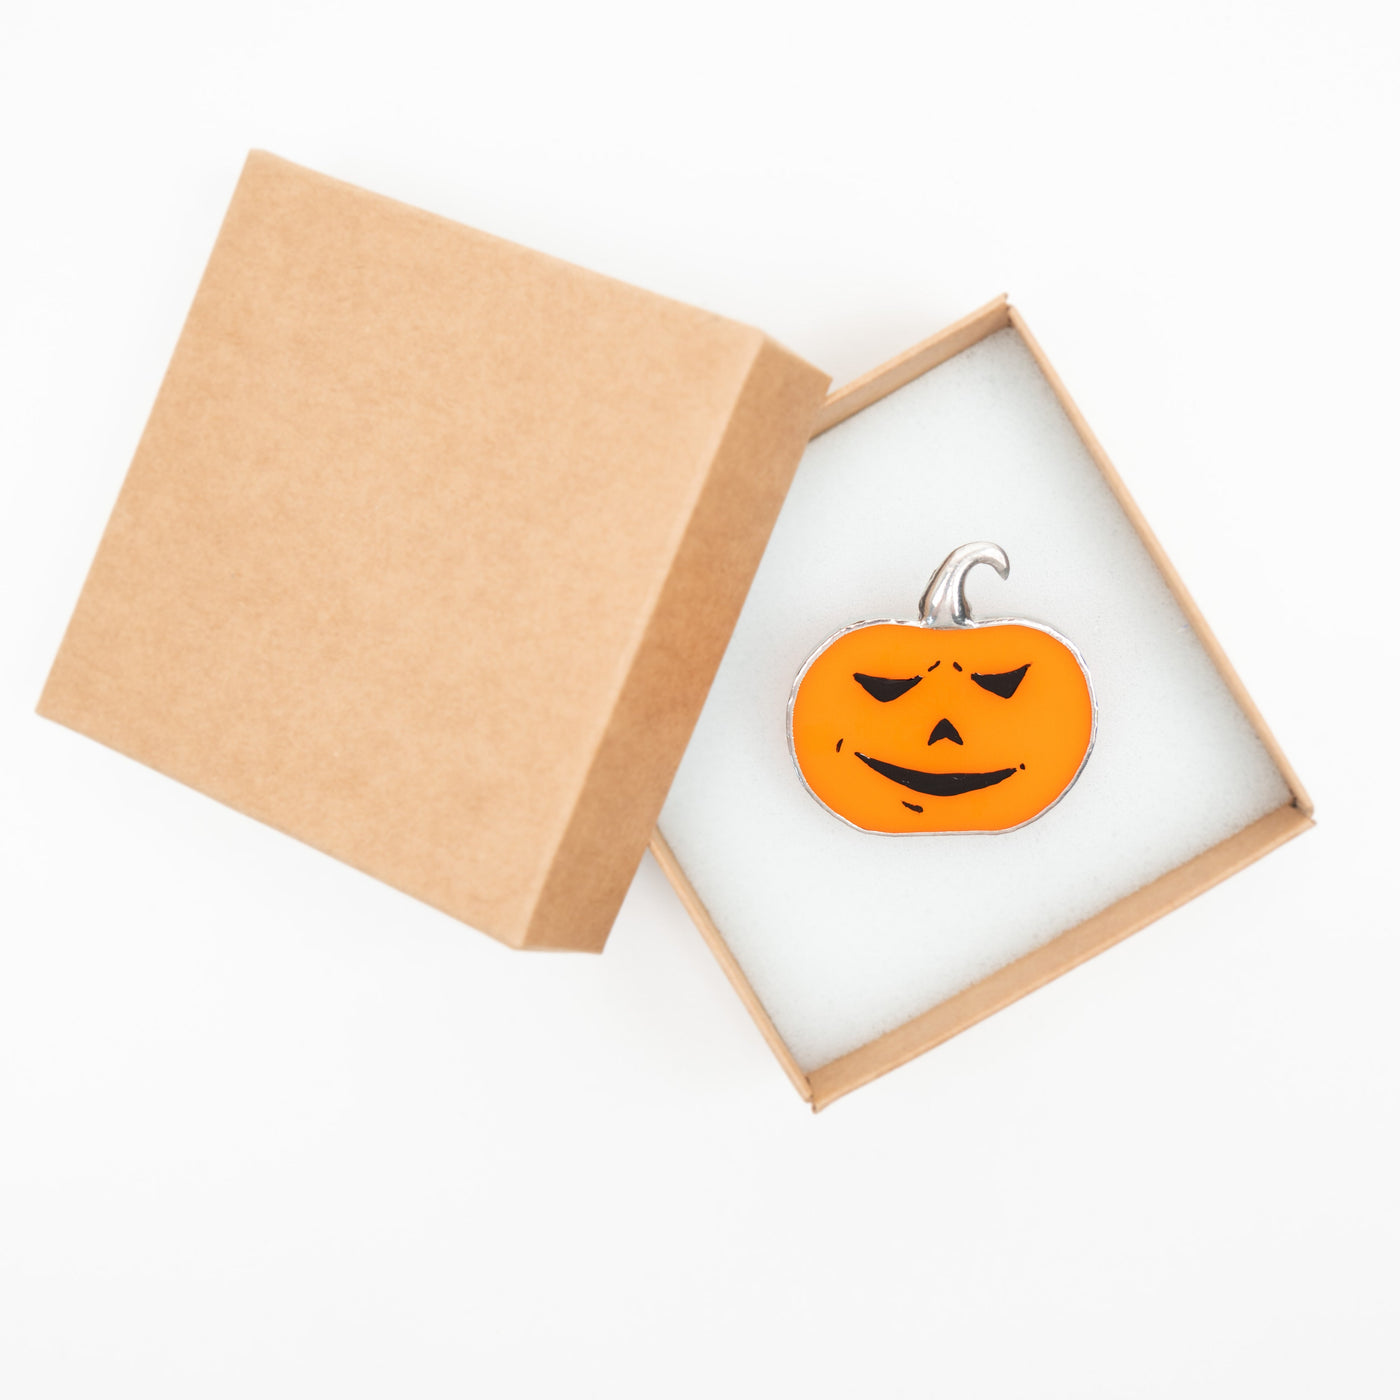 Stained glass orange Halloween pumpkin brooch in a brand box